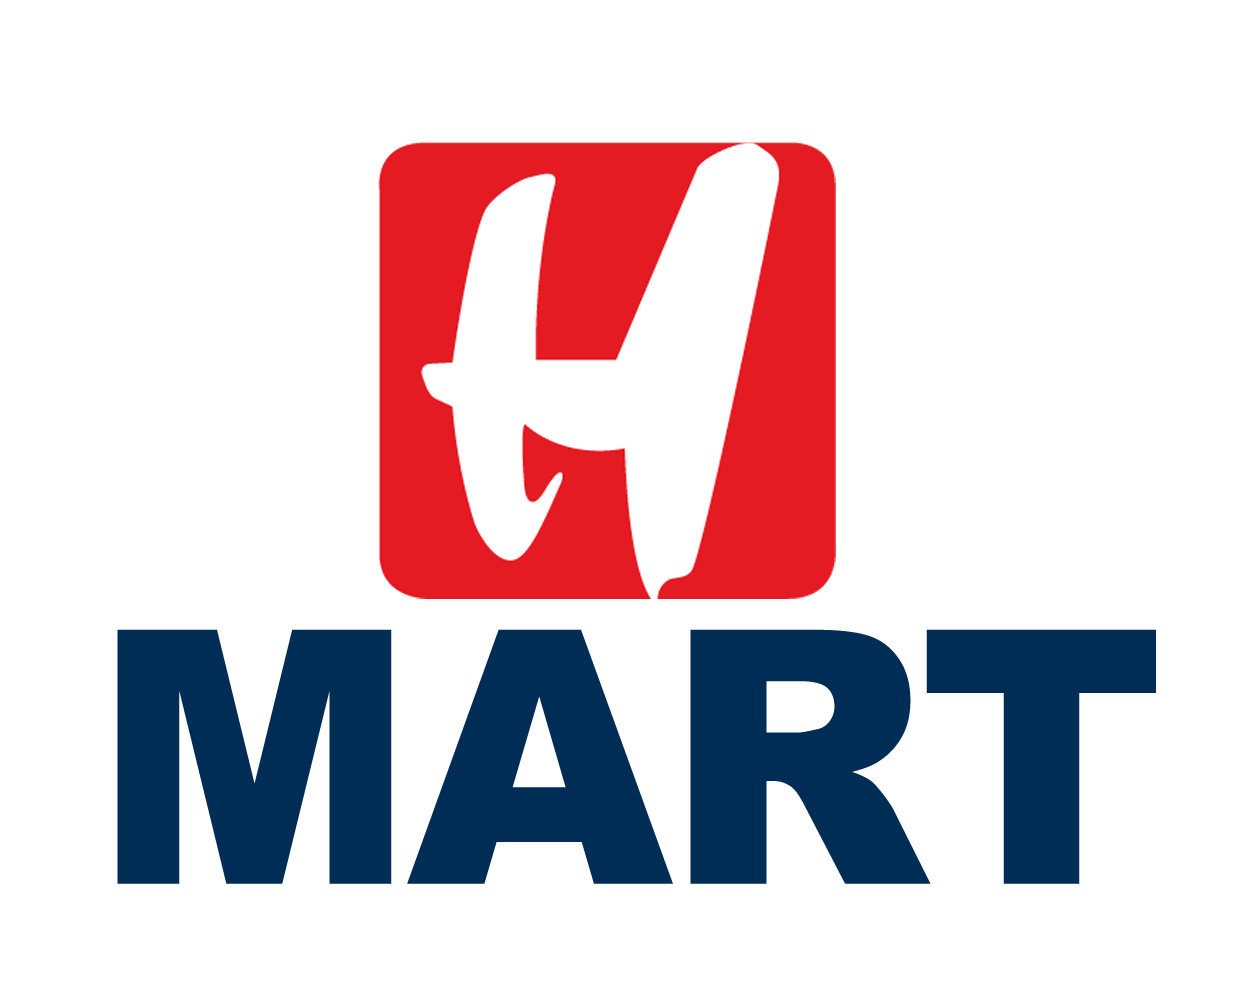 hmart_logo1.png